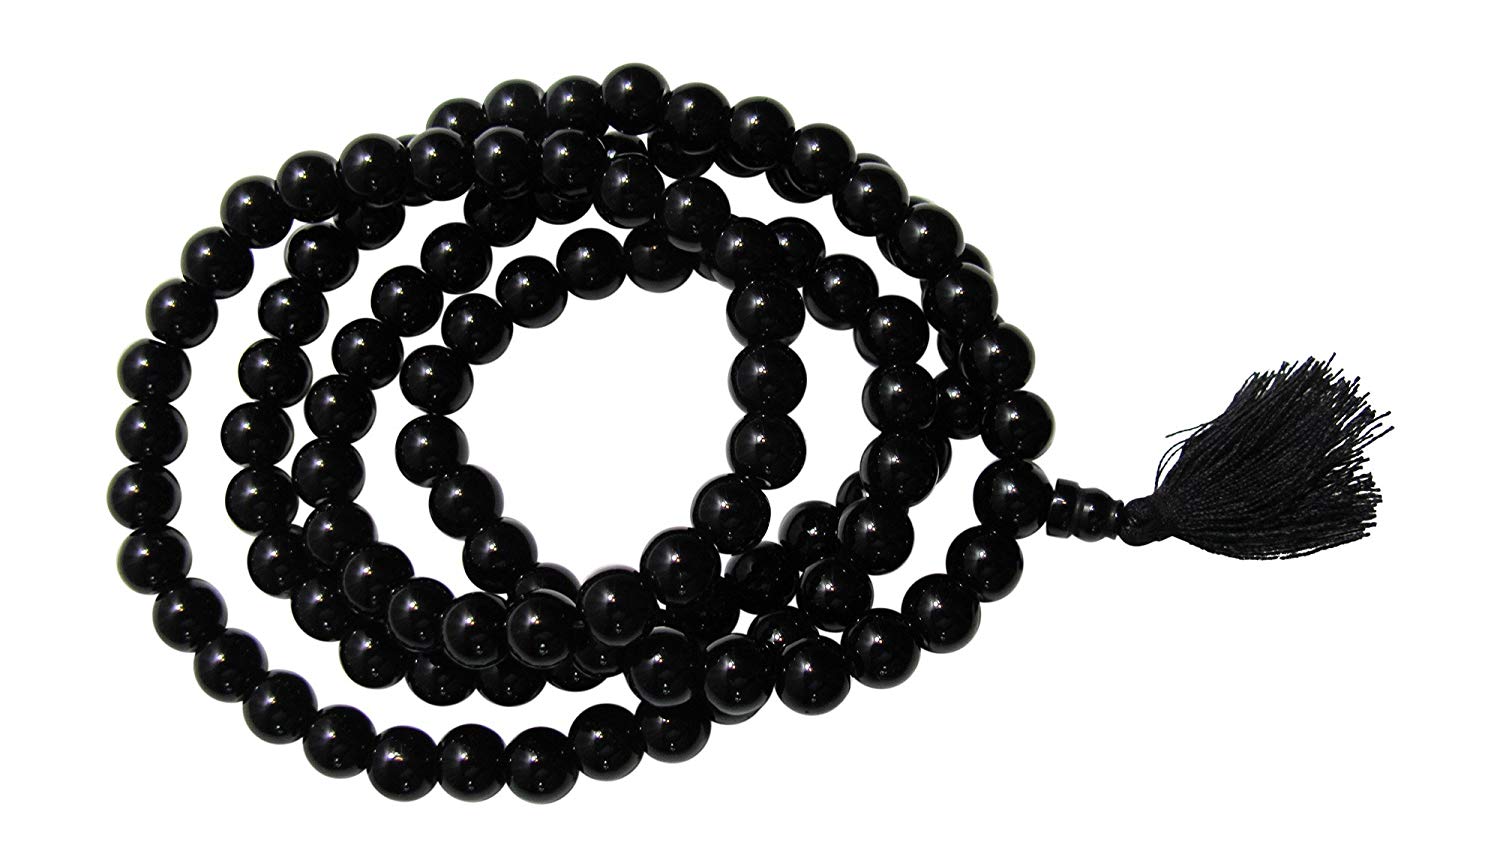 108ct Black Onyx Yoga Meditation Chakra Mala Prayer Bead Necklace - Ambali Fashion Necklaces accessory, bohemian, boho, ethnic, gypsy, hippie, indian, meditation, necklace, new age, rosary, t